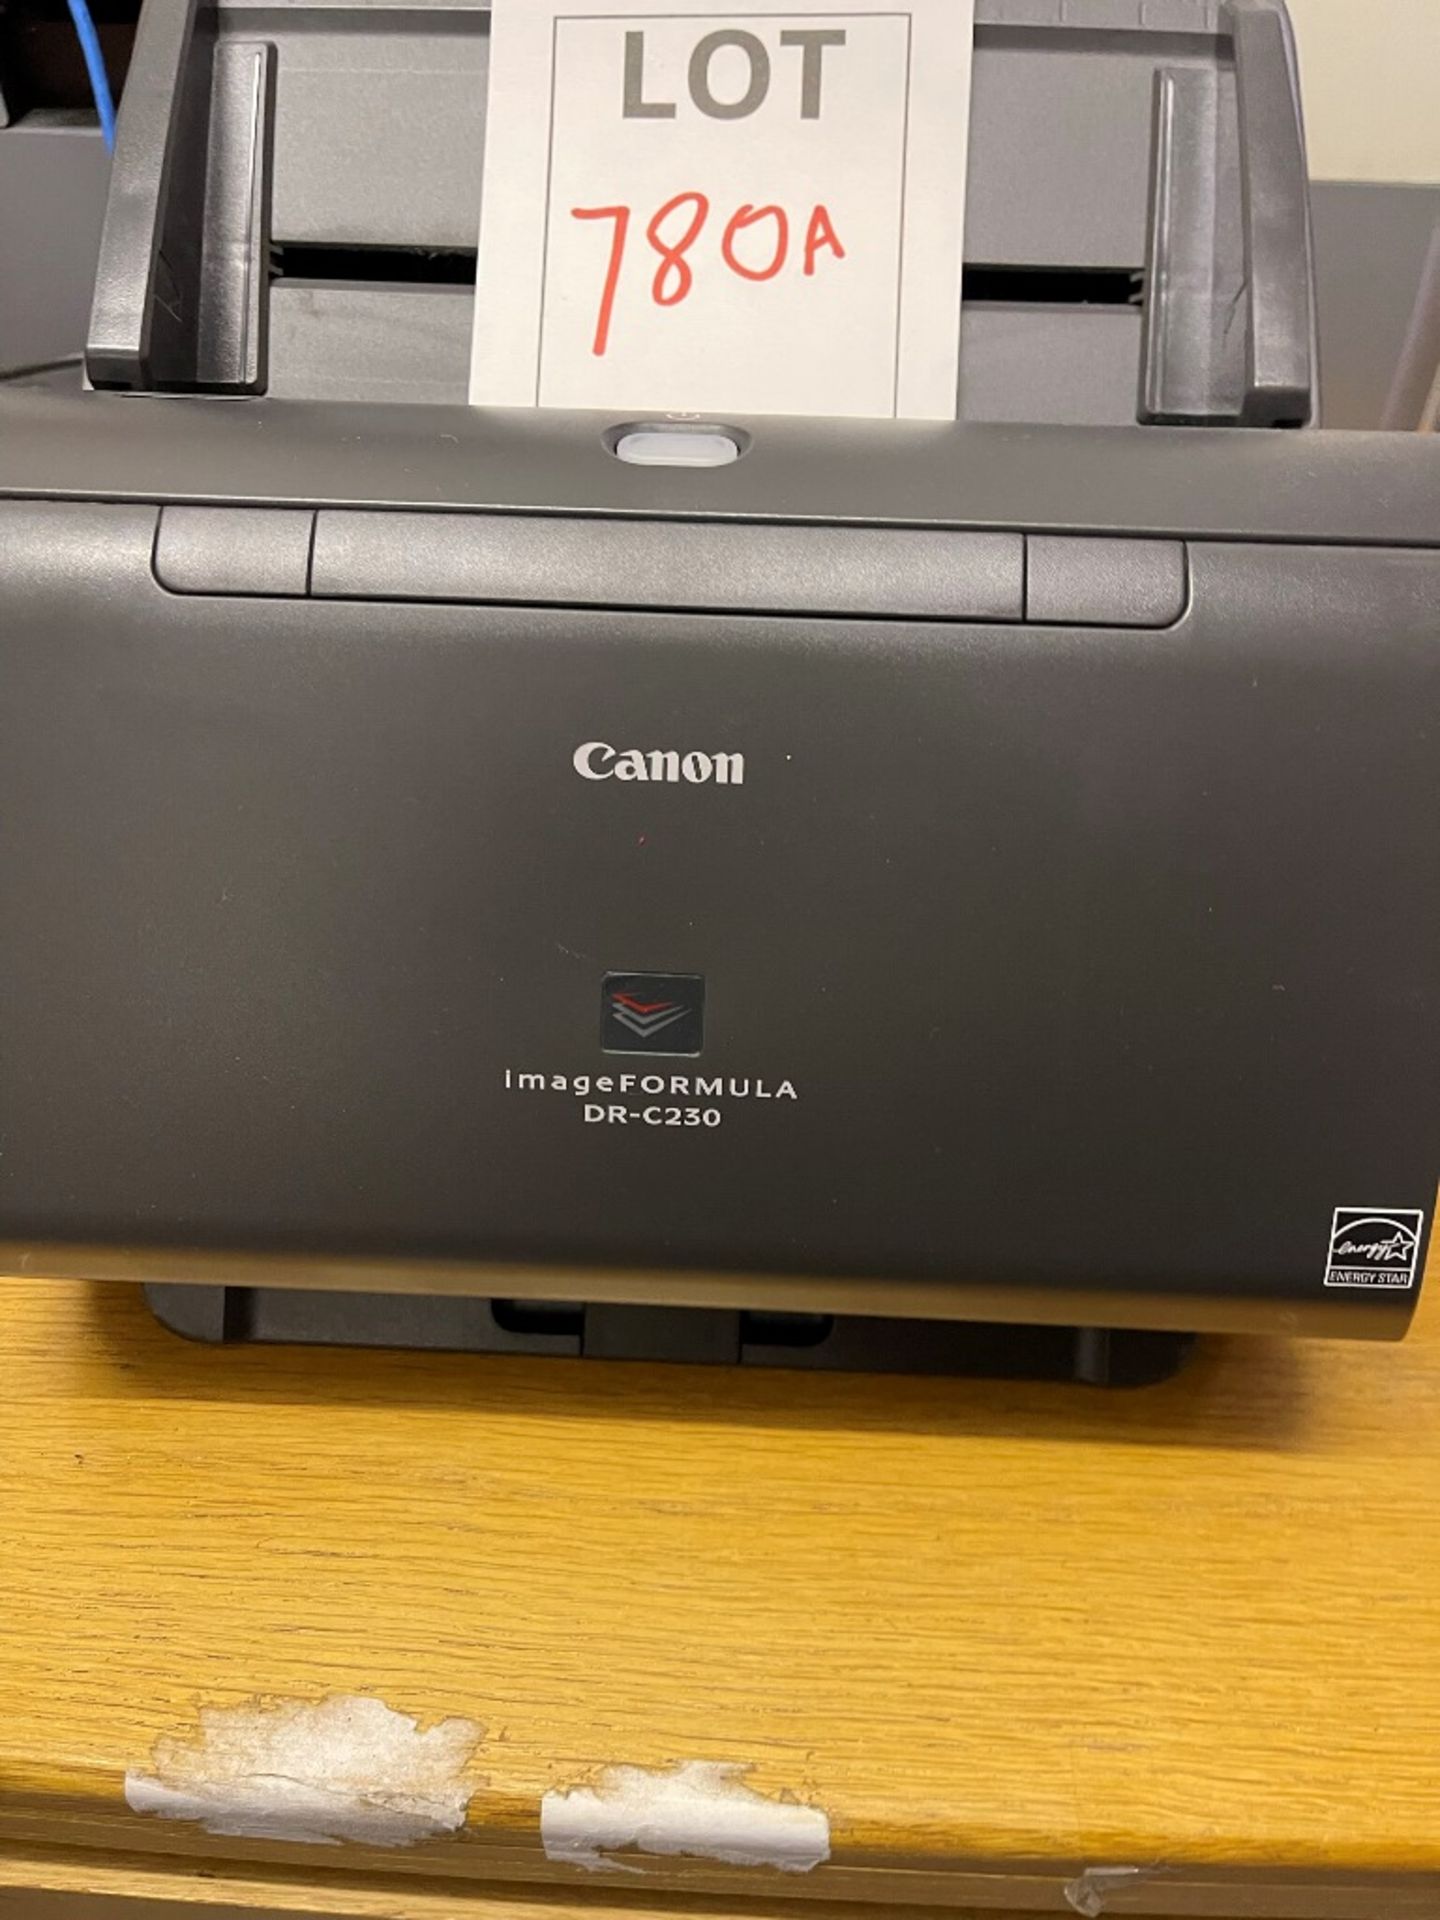 Canon Image Formula DR-C230 printer - Image 2 of 2